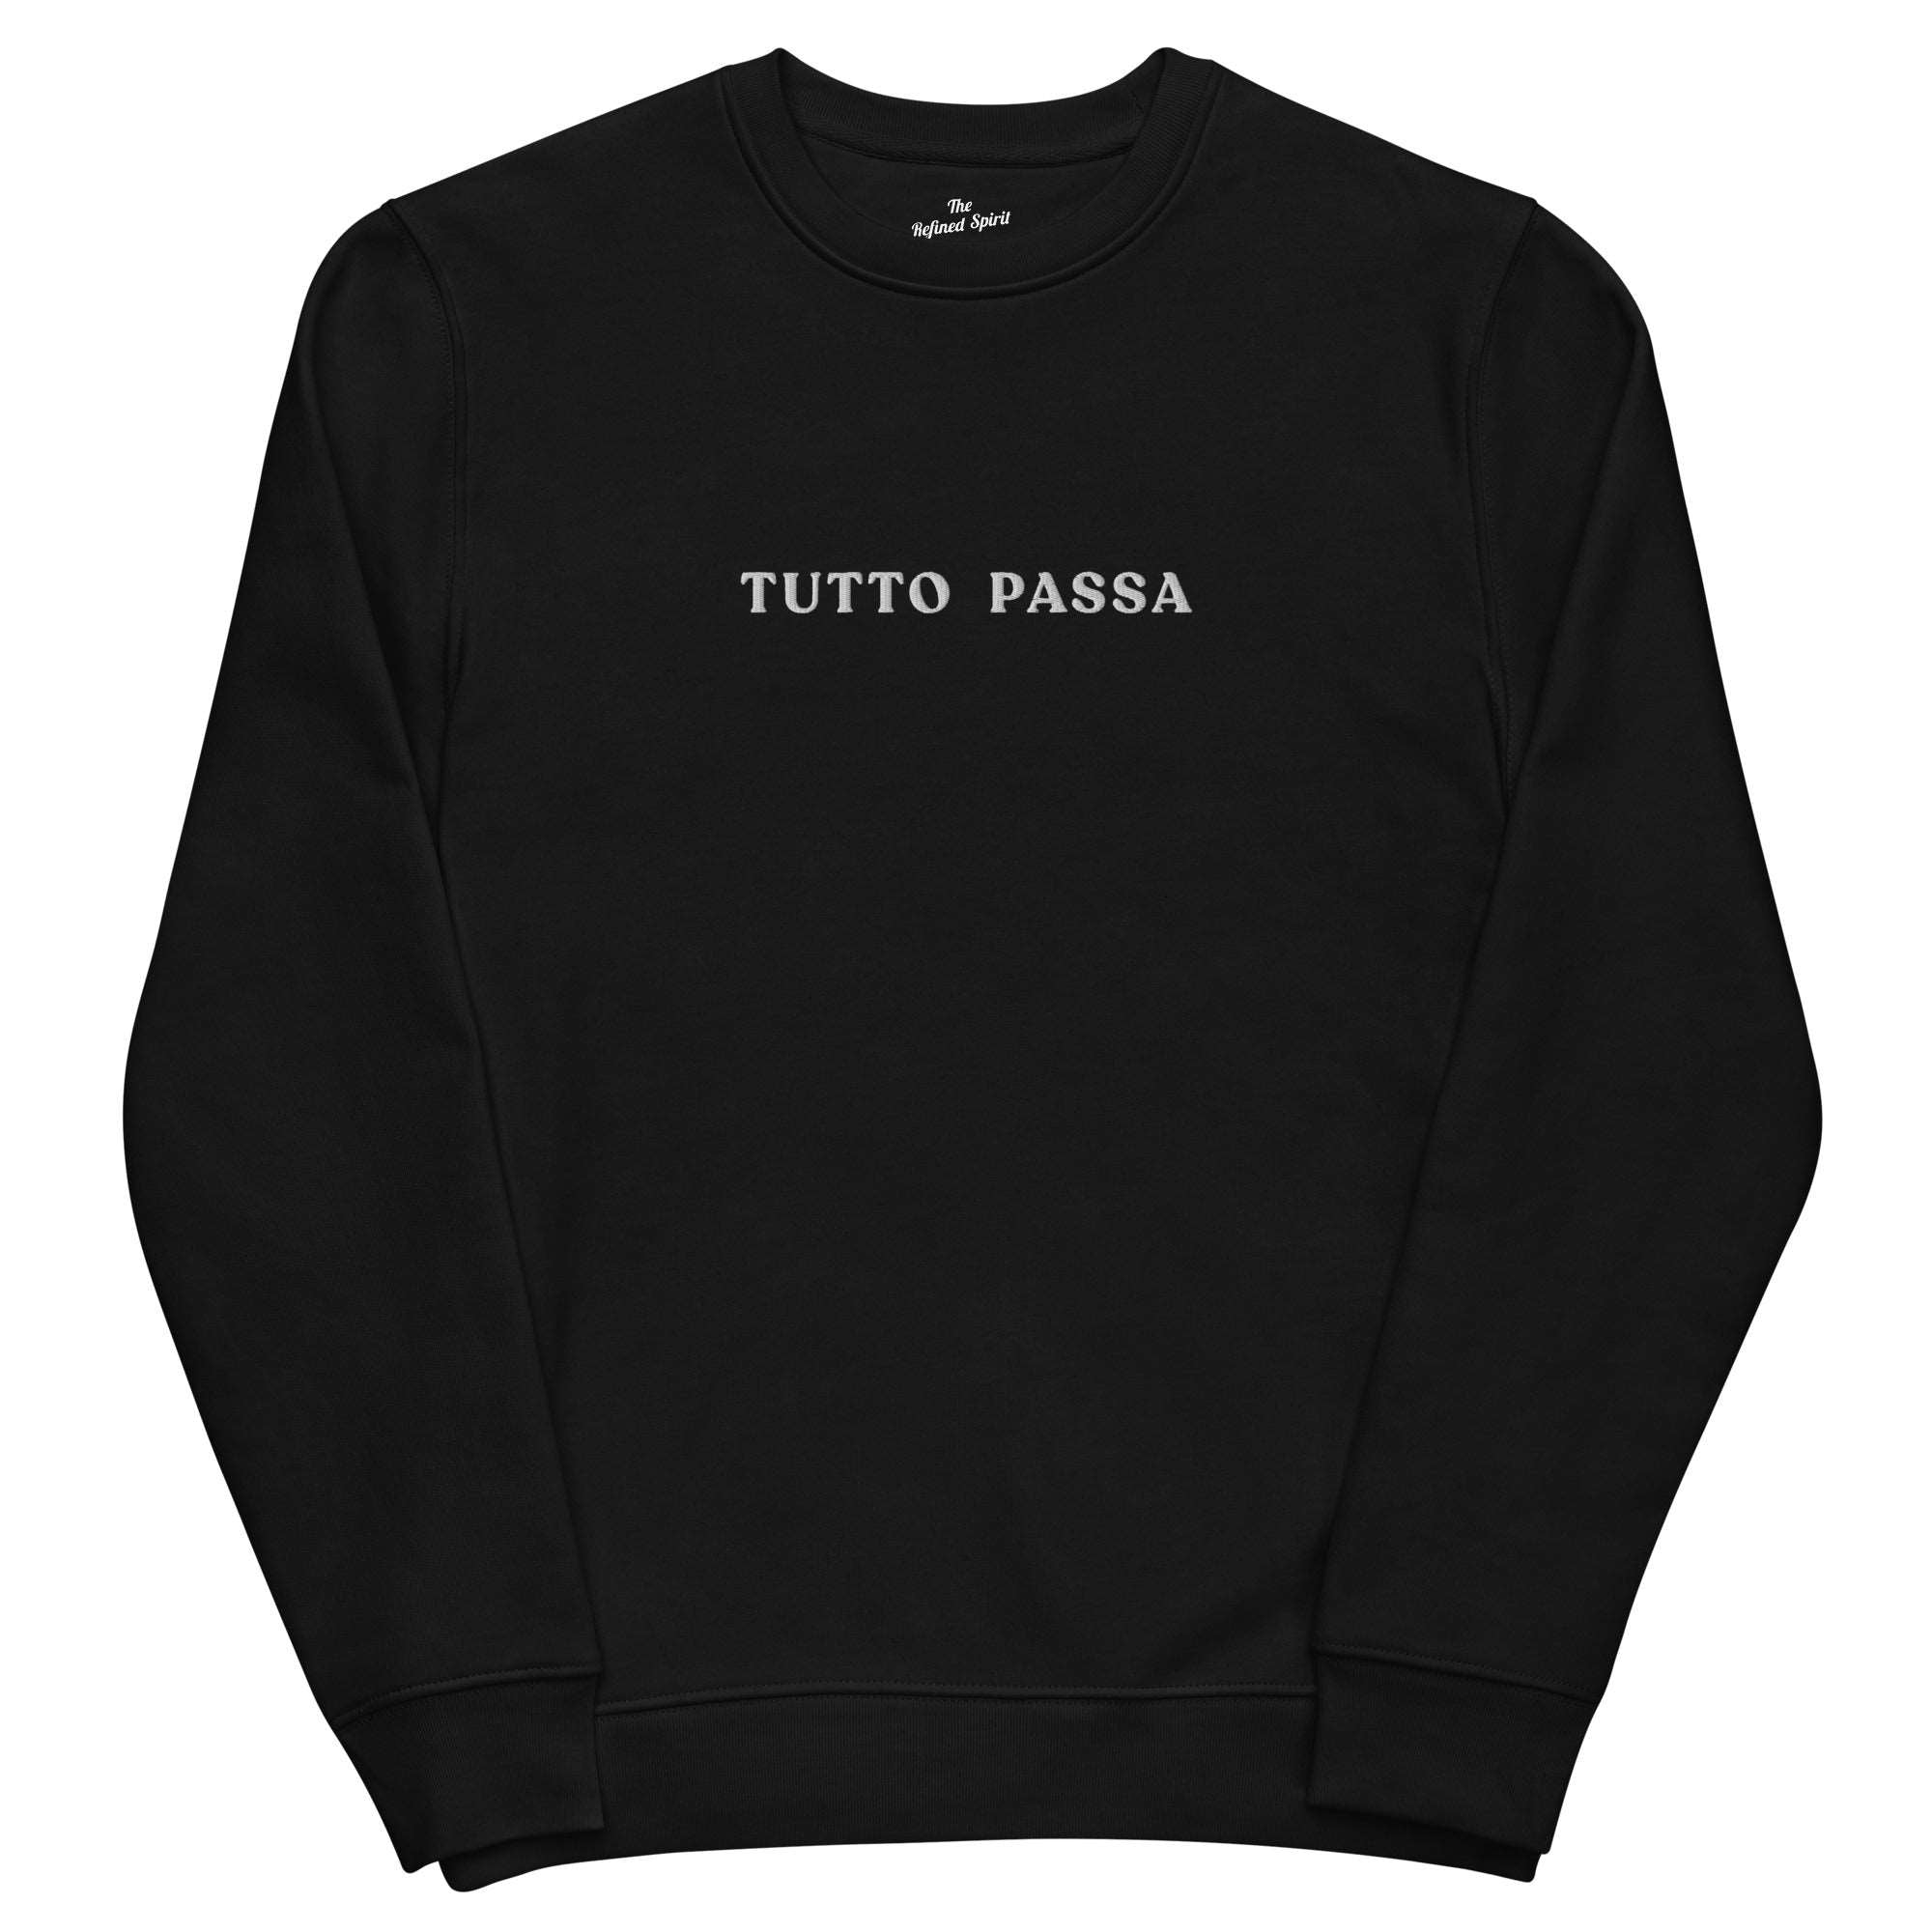 Tutto Passa - Organic Embroidered Sweatshirt - The Refined Spirit